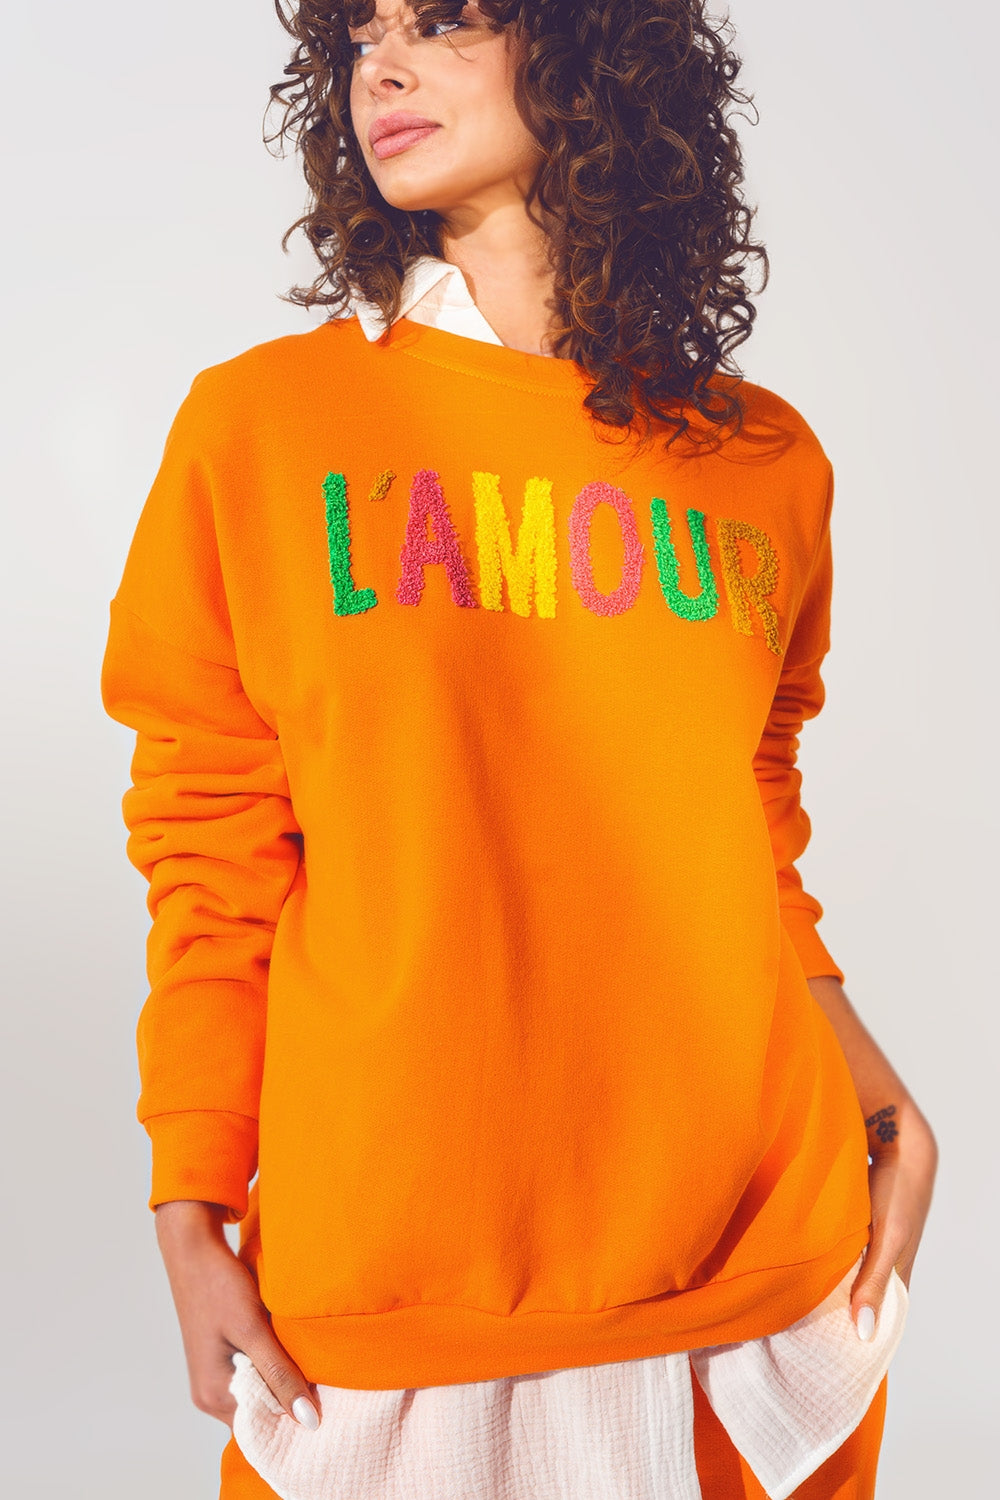 L'amour Text Sweater in Orange - Szua Store